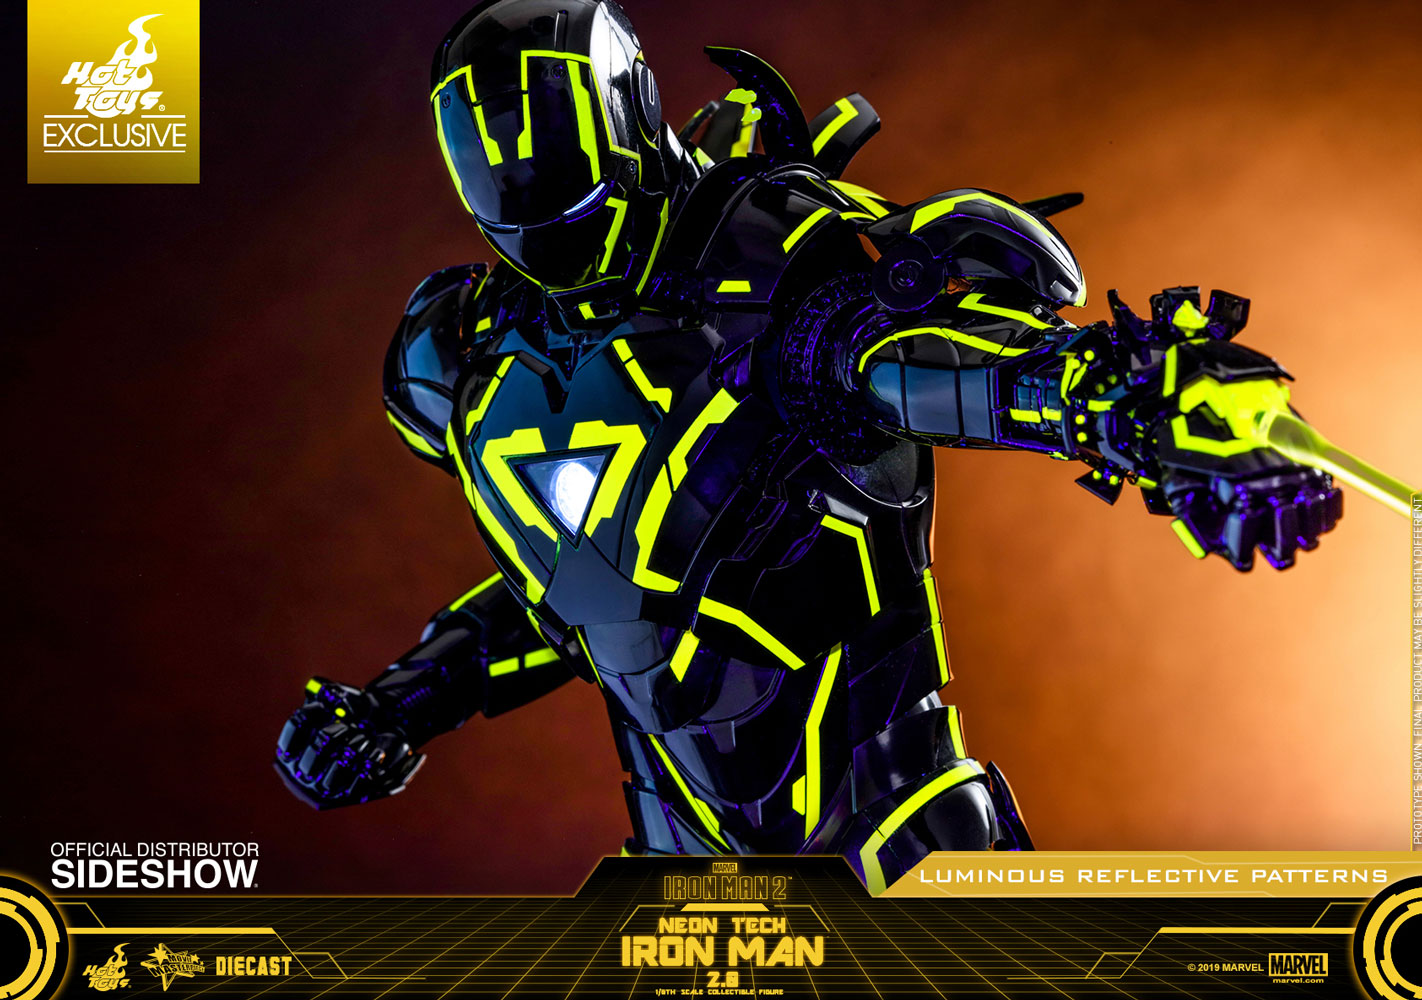 Marvel Neon Tech IRON MAN 2.0 Movie Masterpiece 1/6 Sixth Scale Figure Hot Toys 